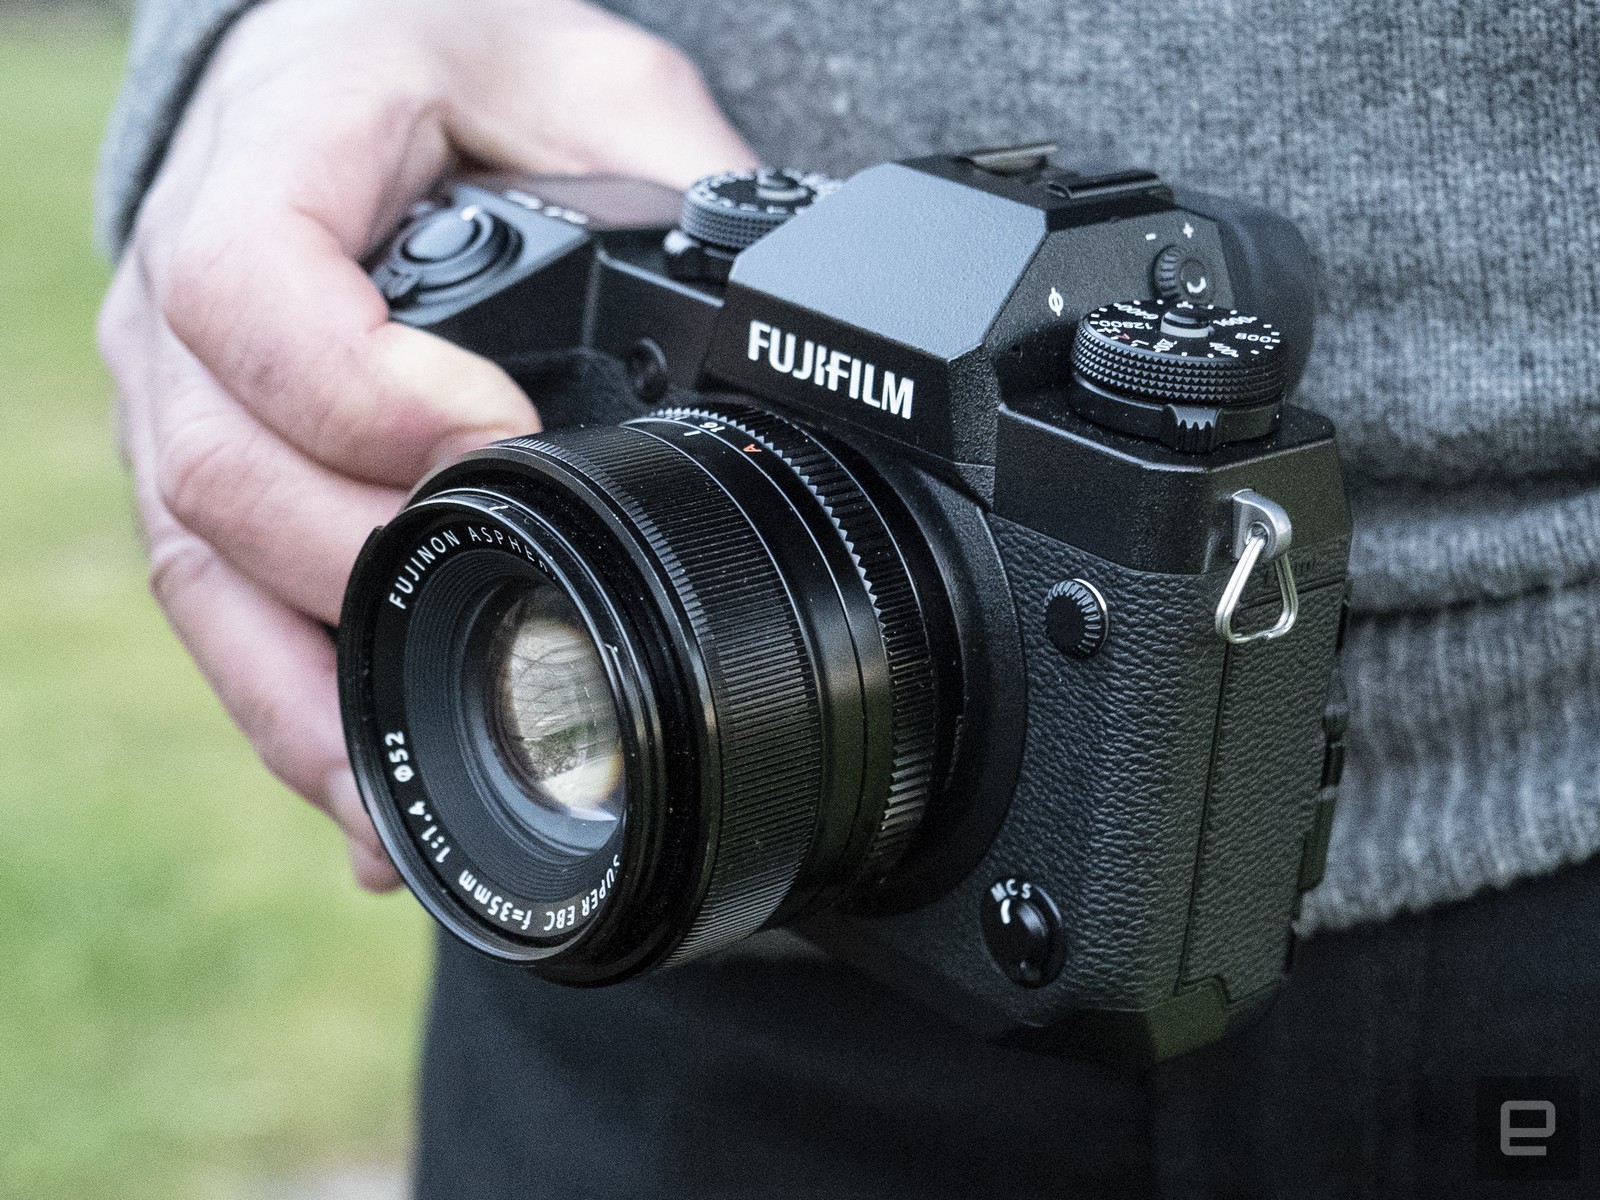 zoon Afwijken regel Fujifilm X-H1 review: Beautiful photos, but lacking X-series allure |  Engadget